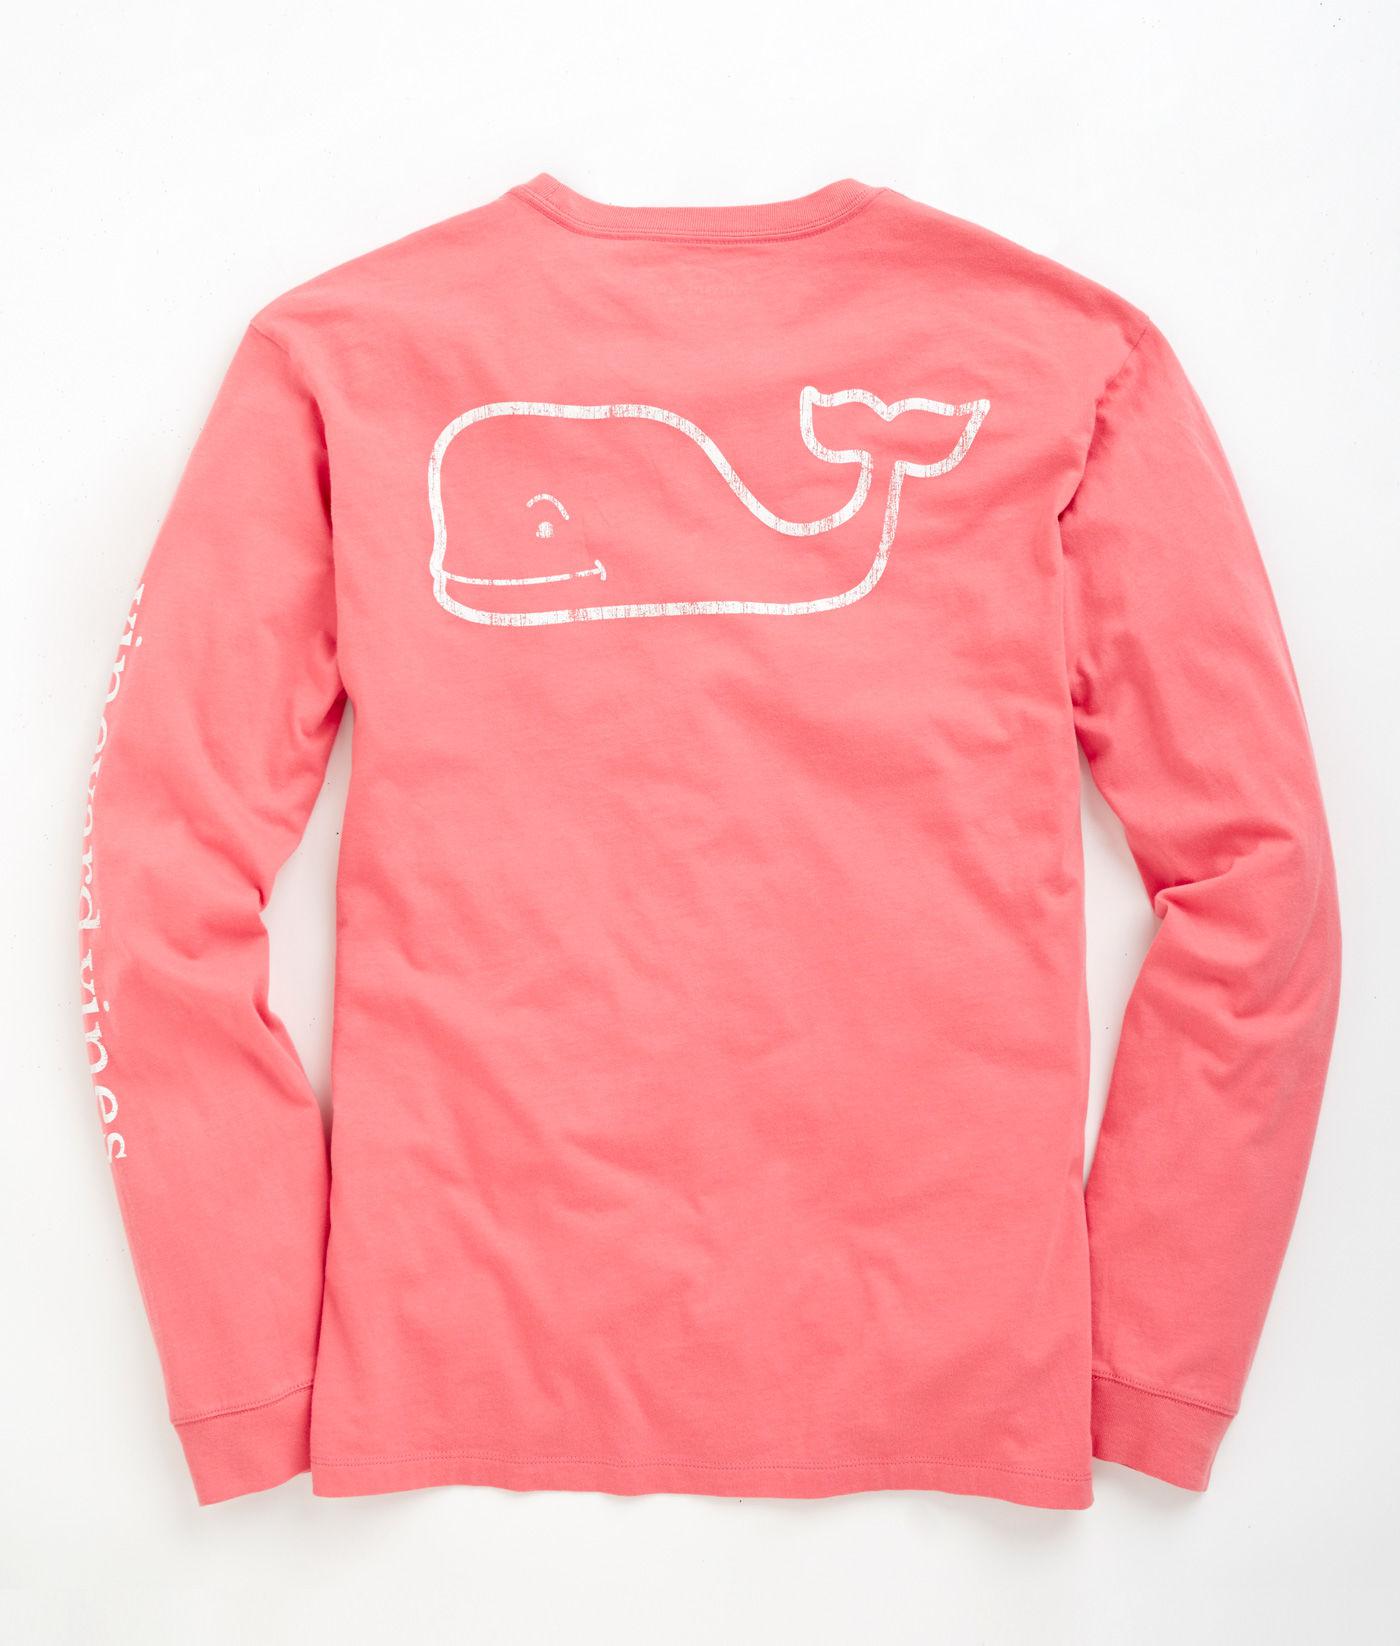 Lyst - Vineyard Vines Long-sleeve Vintage Whale Graphic Pocket T-shirt ...